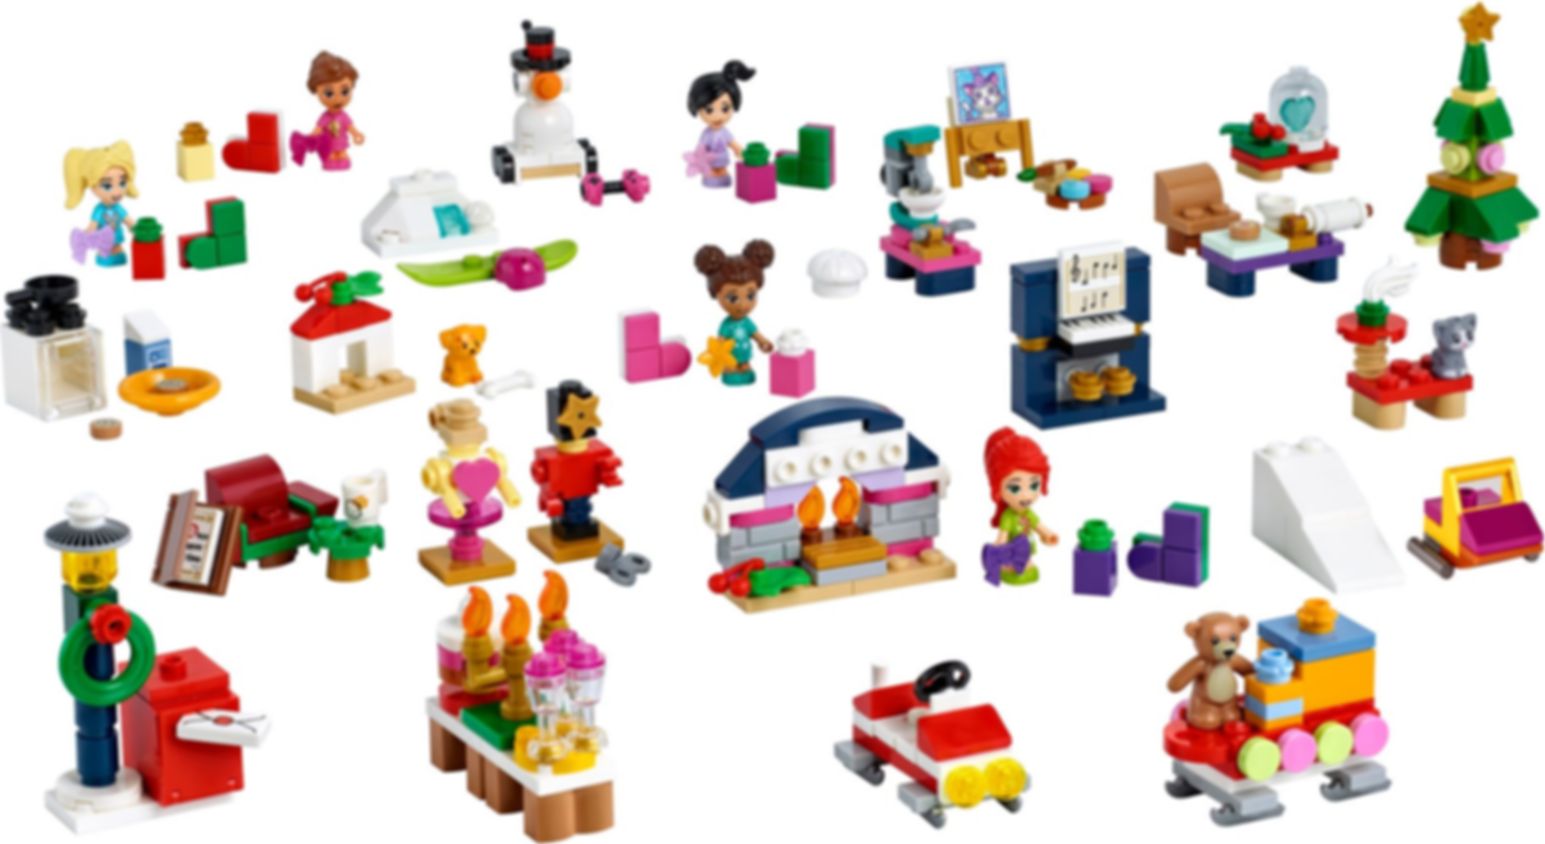 LEGO® Friends Advent Calendar 2021 components